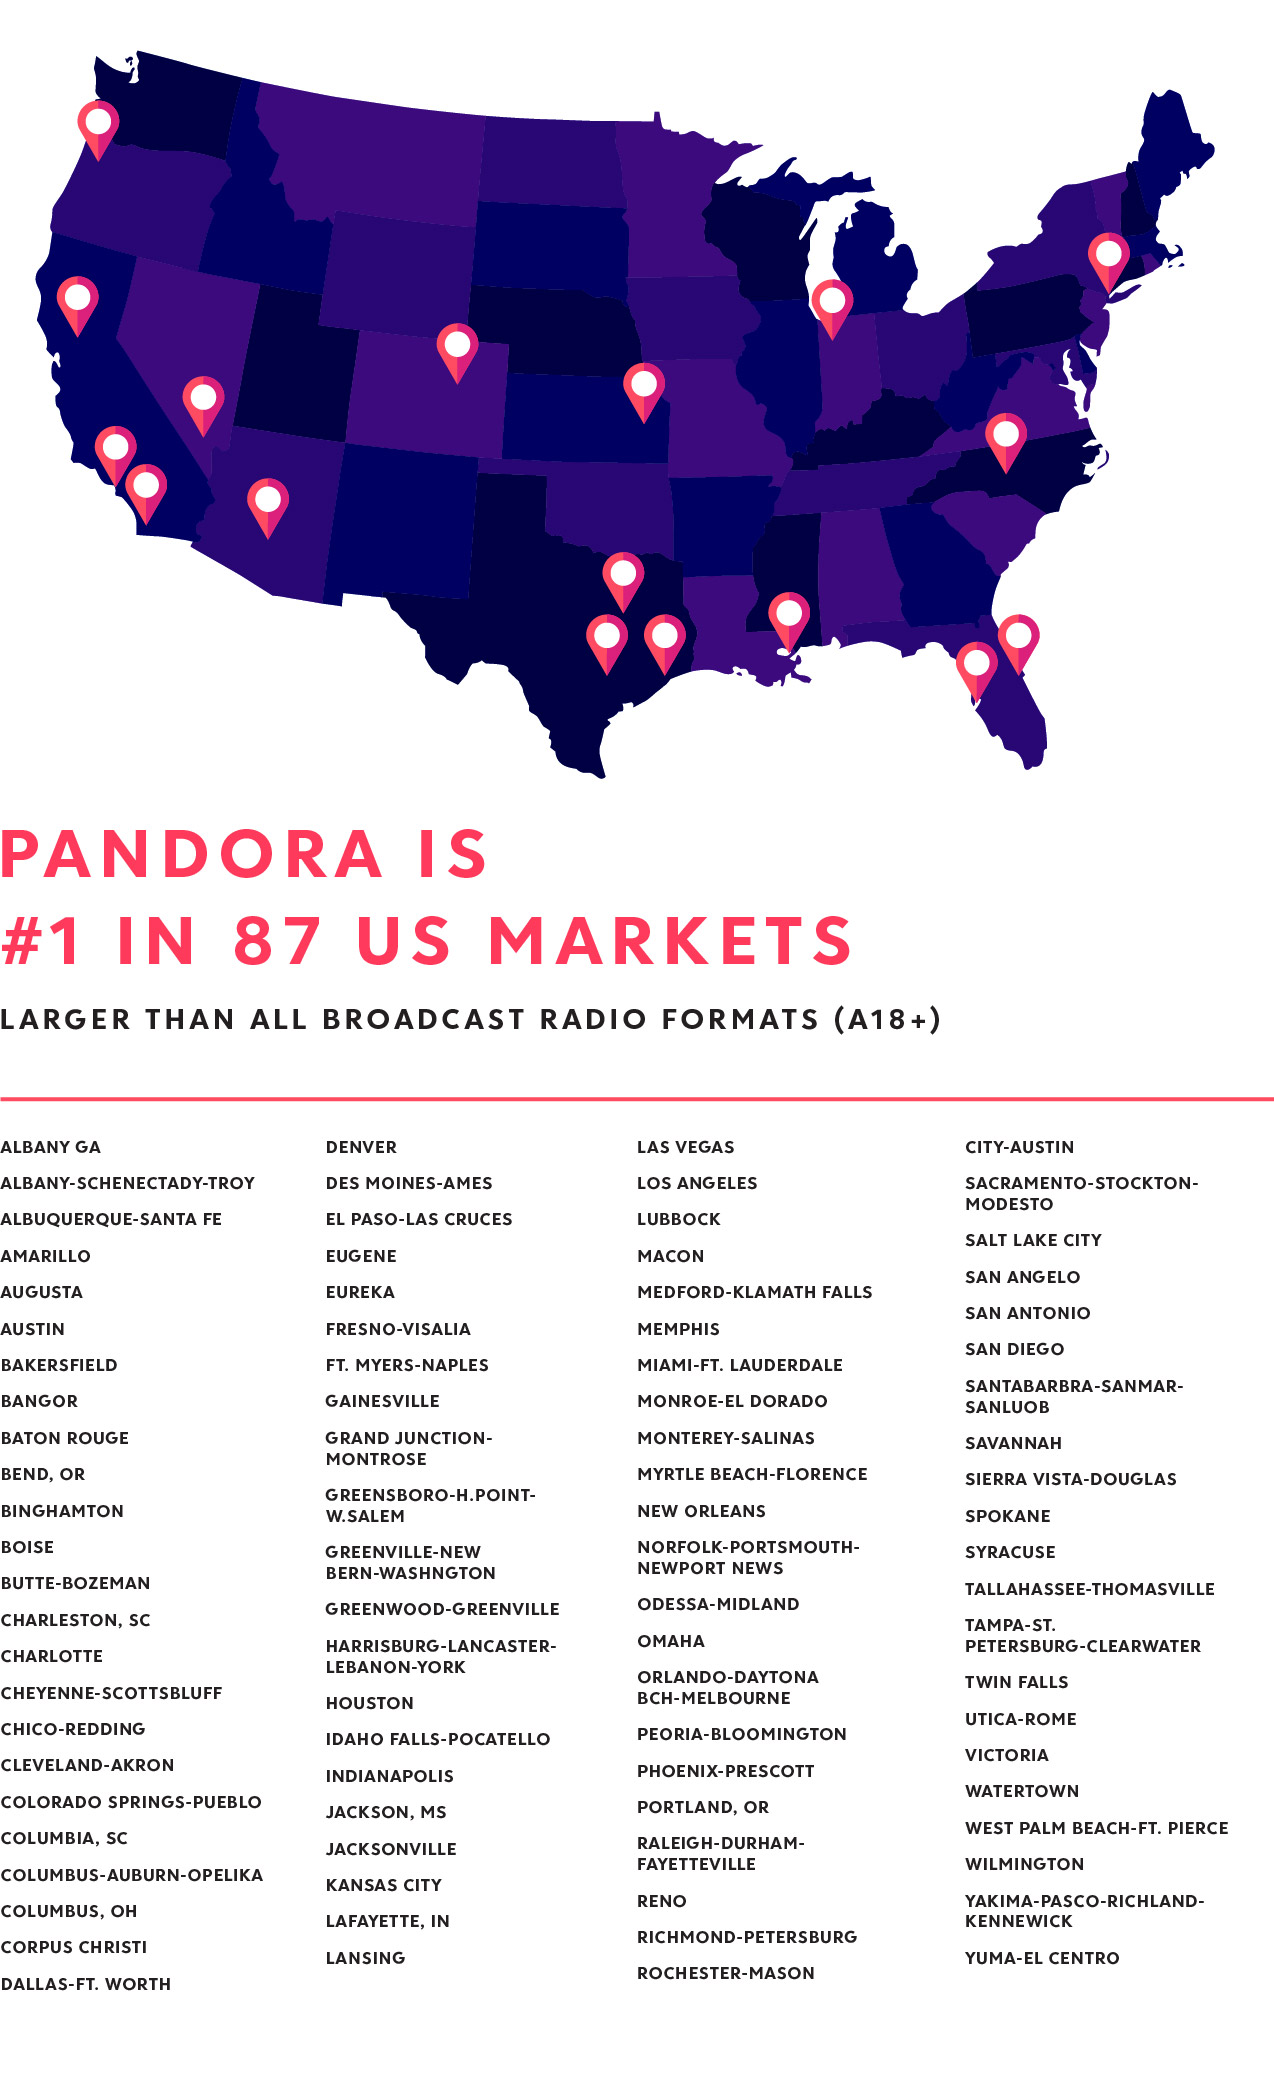 3800 SMB Audience Solutions on Pandora - R4 Website Image - MSA Map